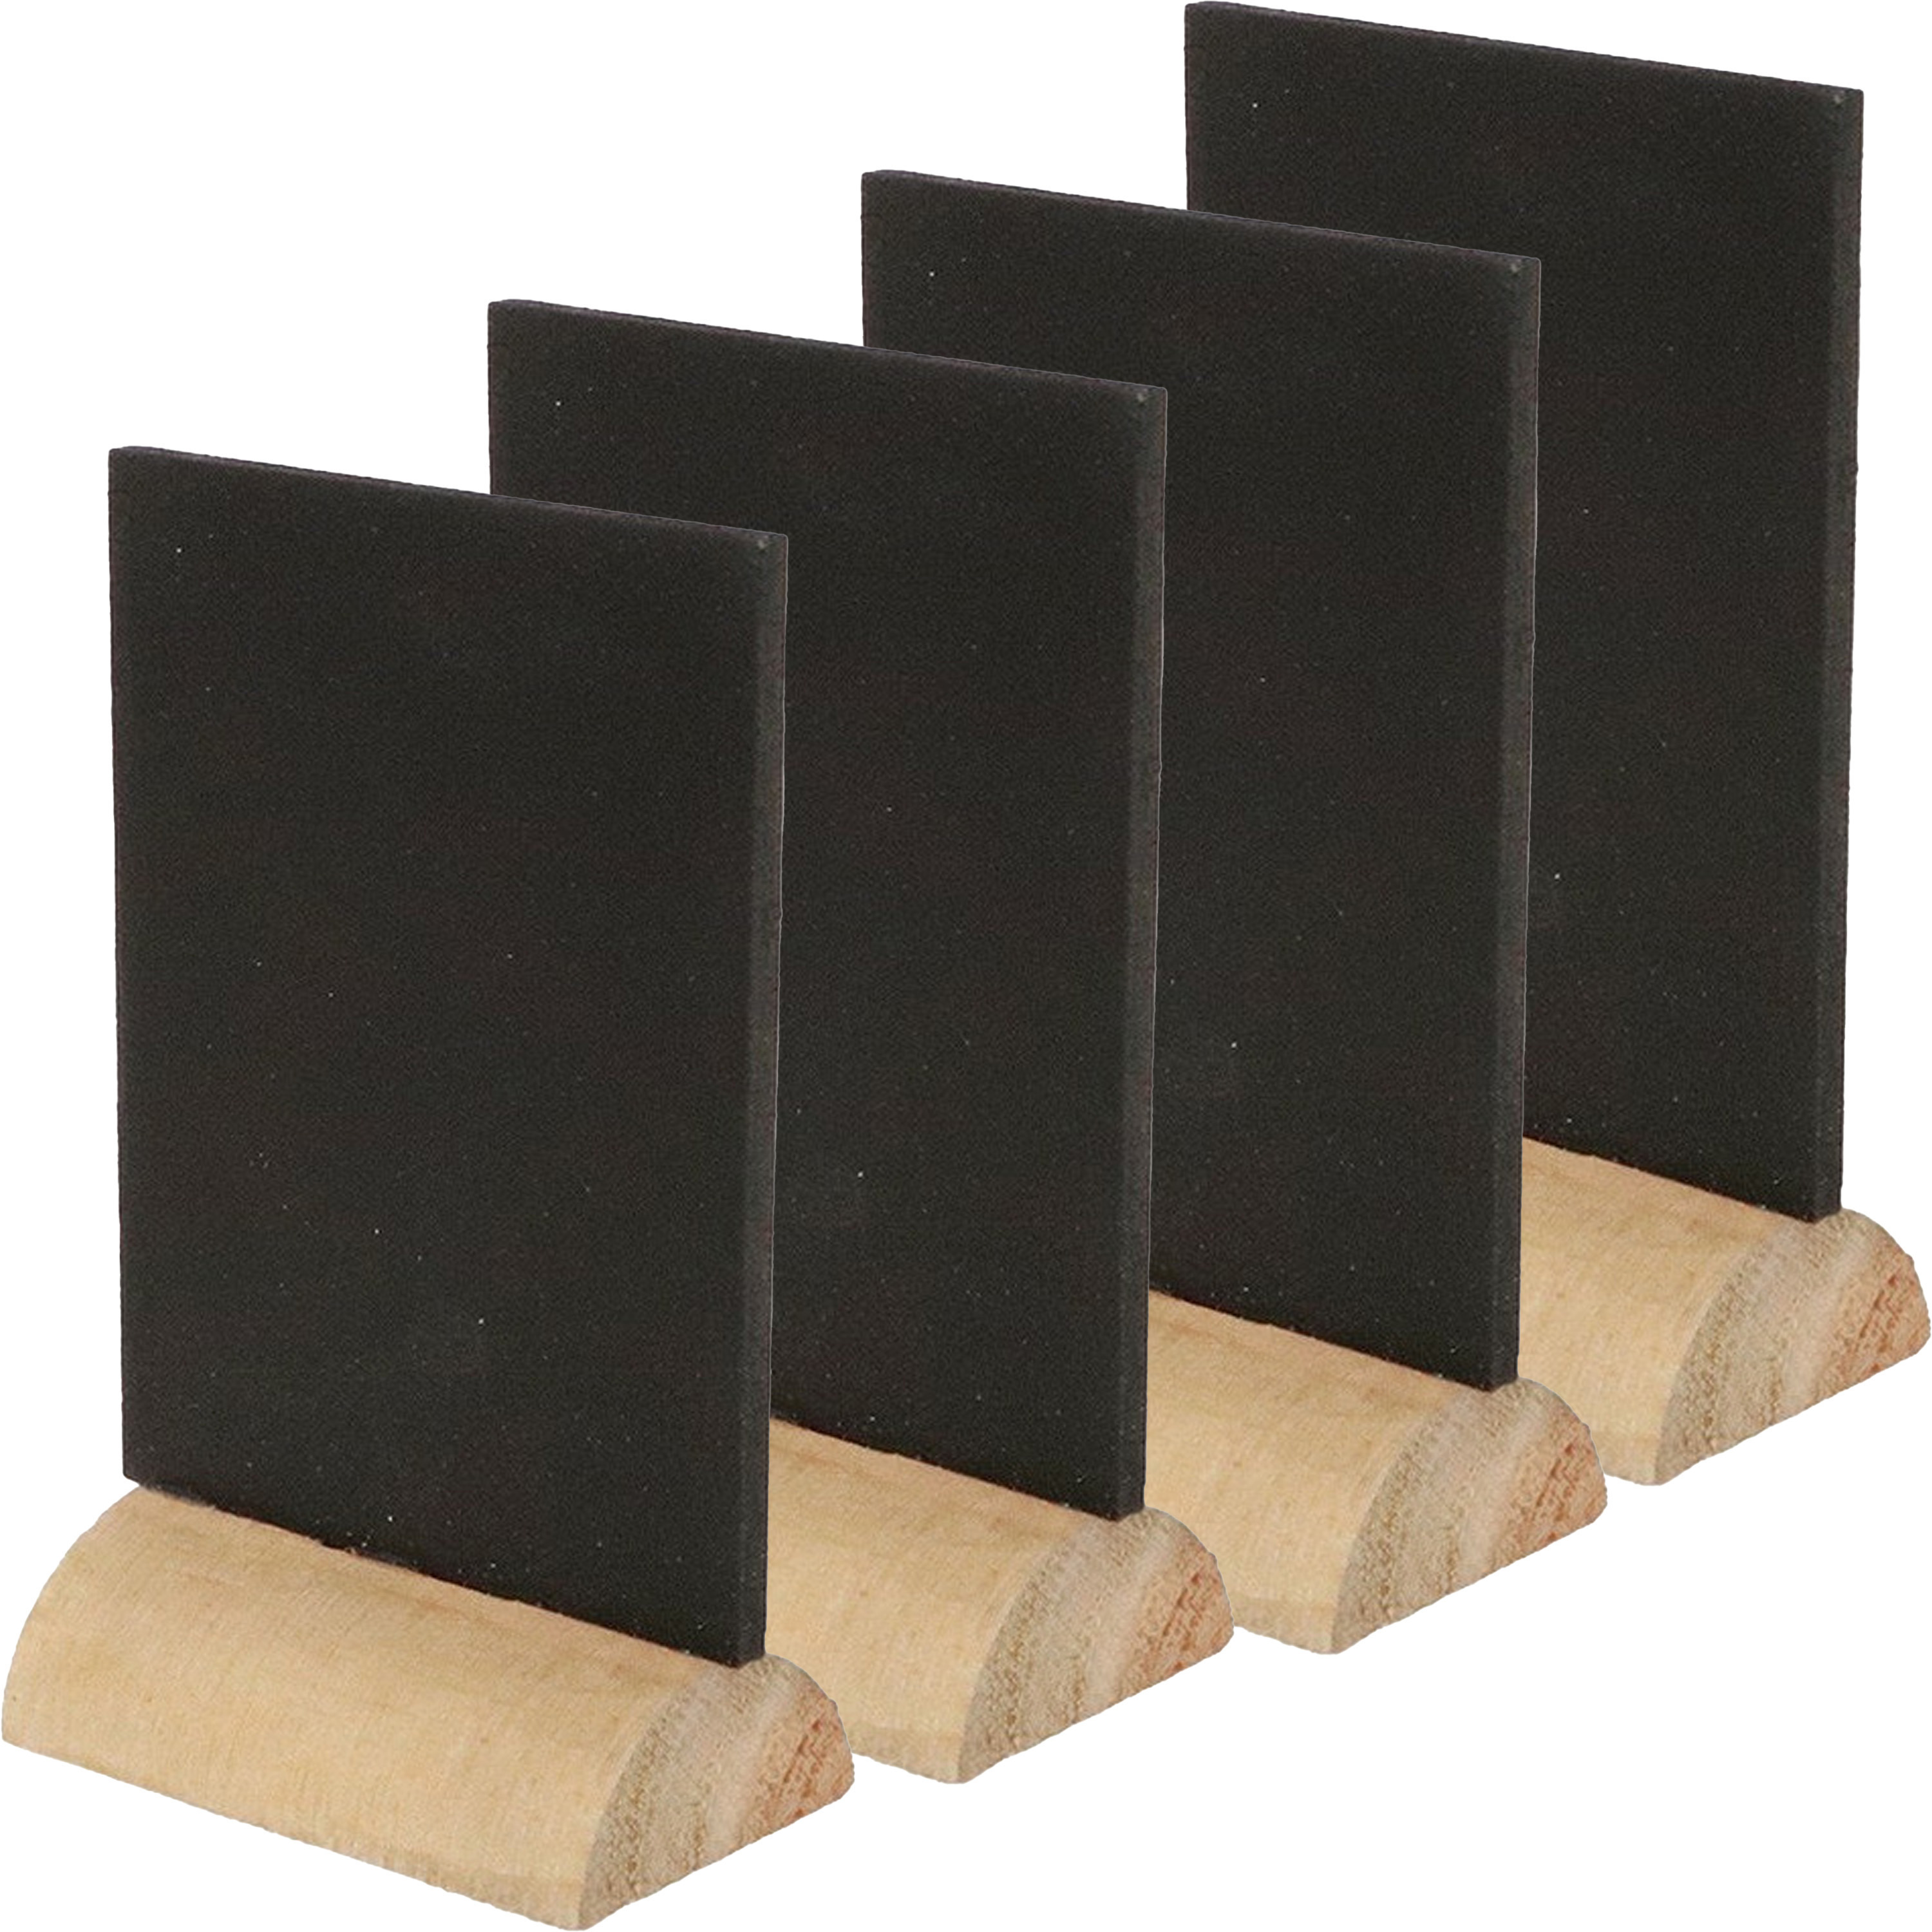 Chaks Mini krijtbordjes/schrijfbordjes - 4x - op houten voet - zwart - 8 cm -